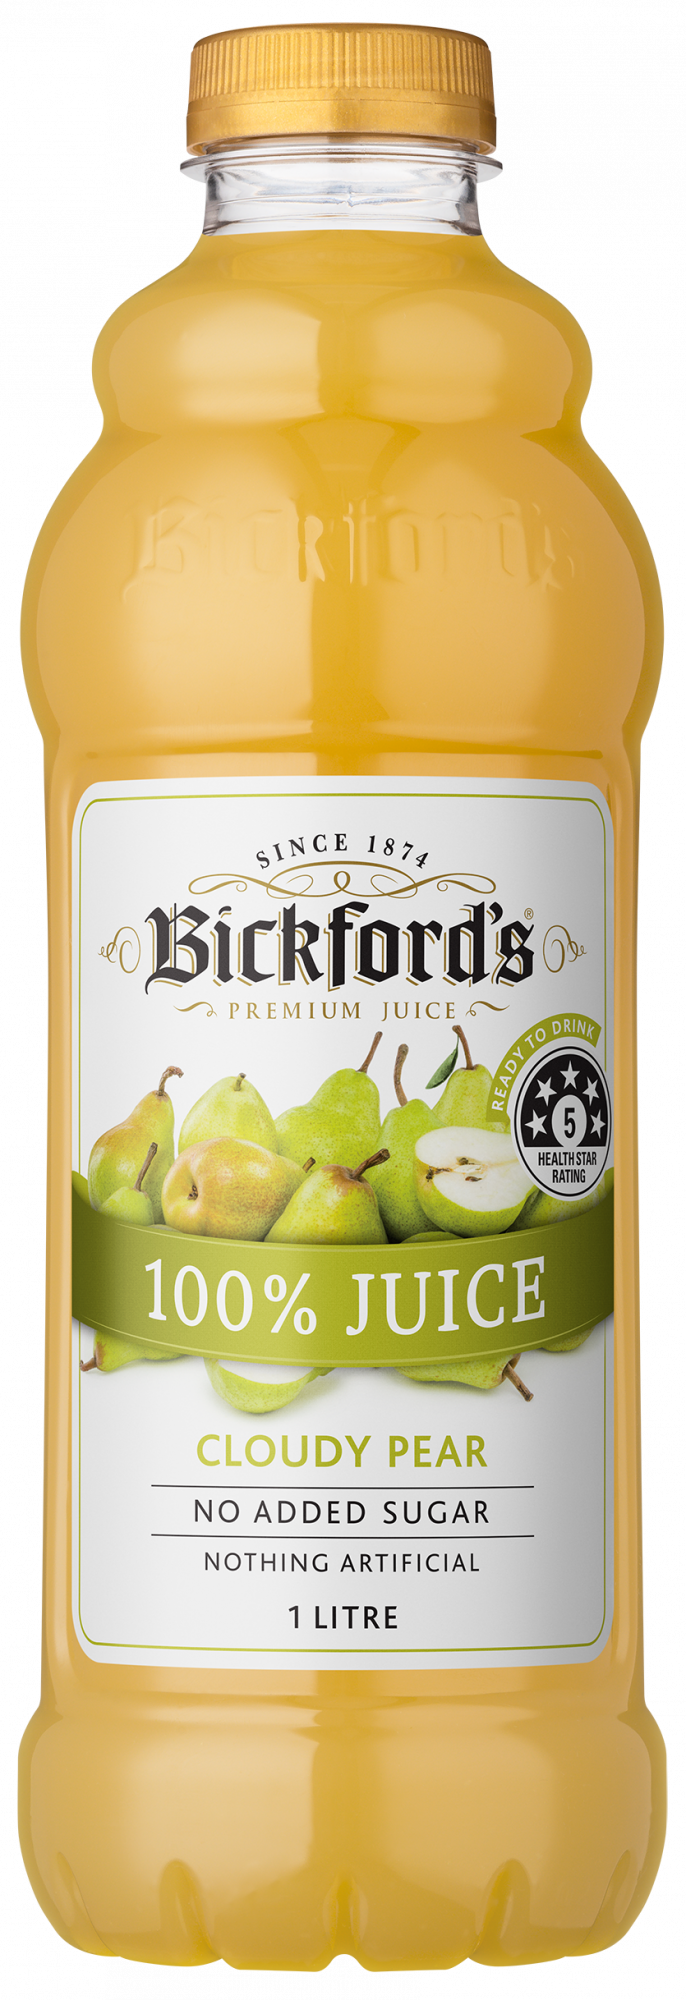 Bickford's Cloudy Pear Juice 1L